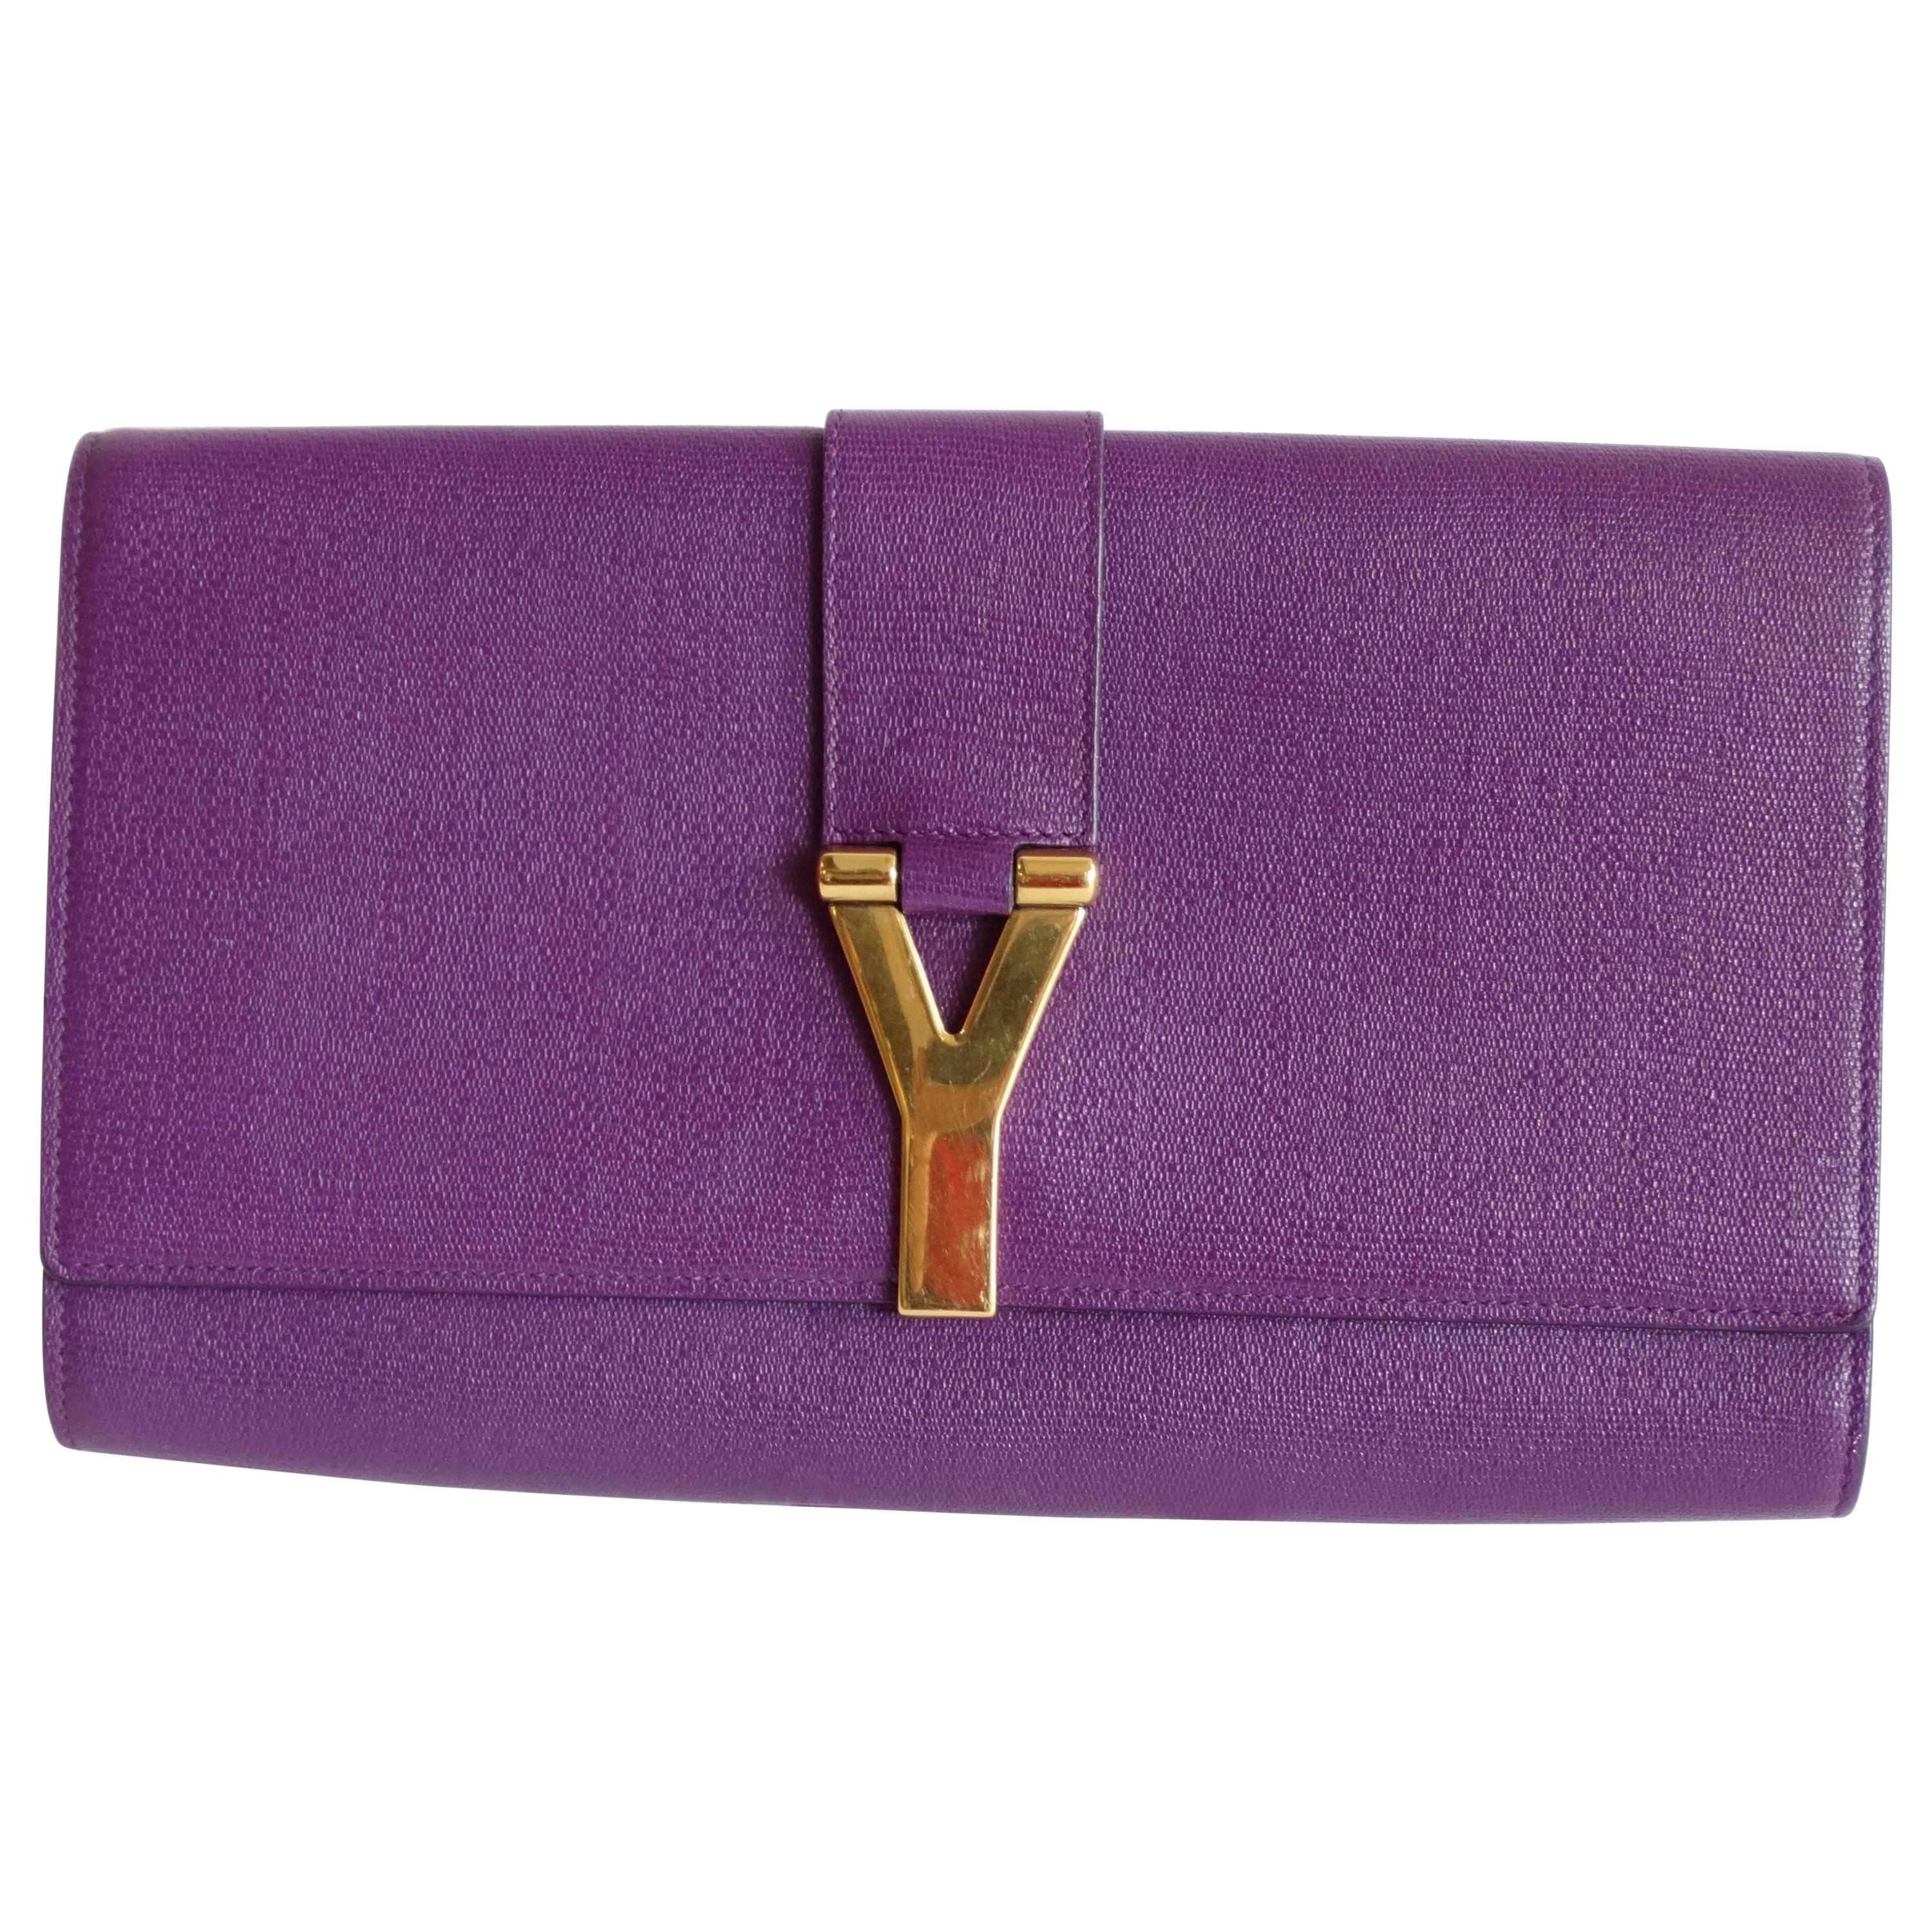 Yves Saint Laurent Cabas Chyc Clutch Bag in Purple 